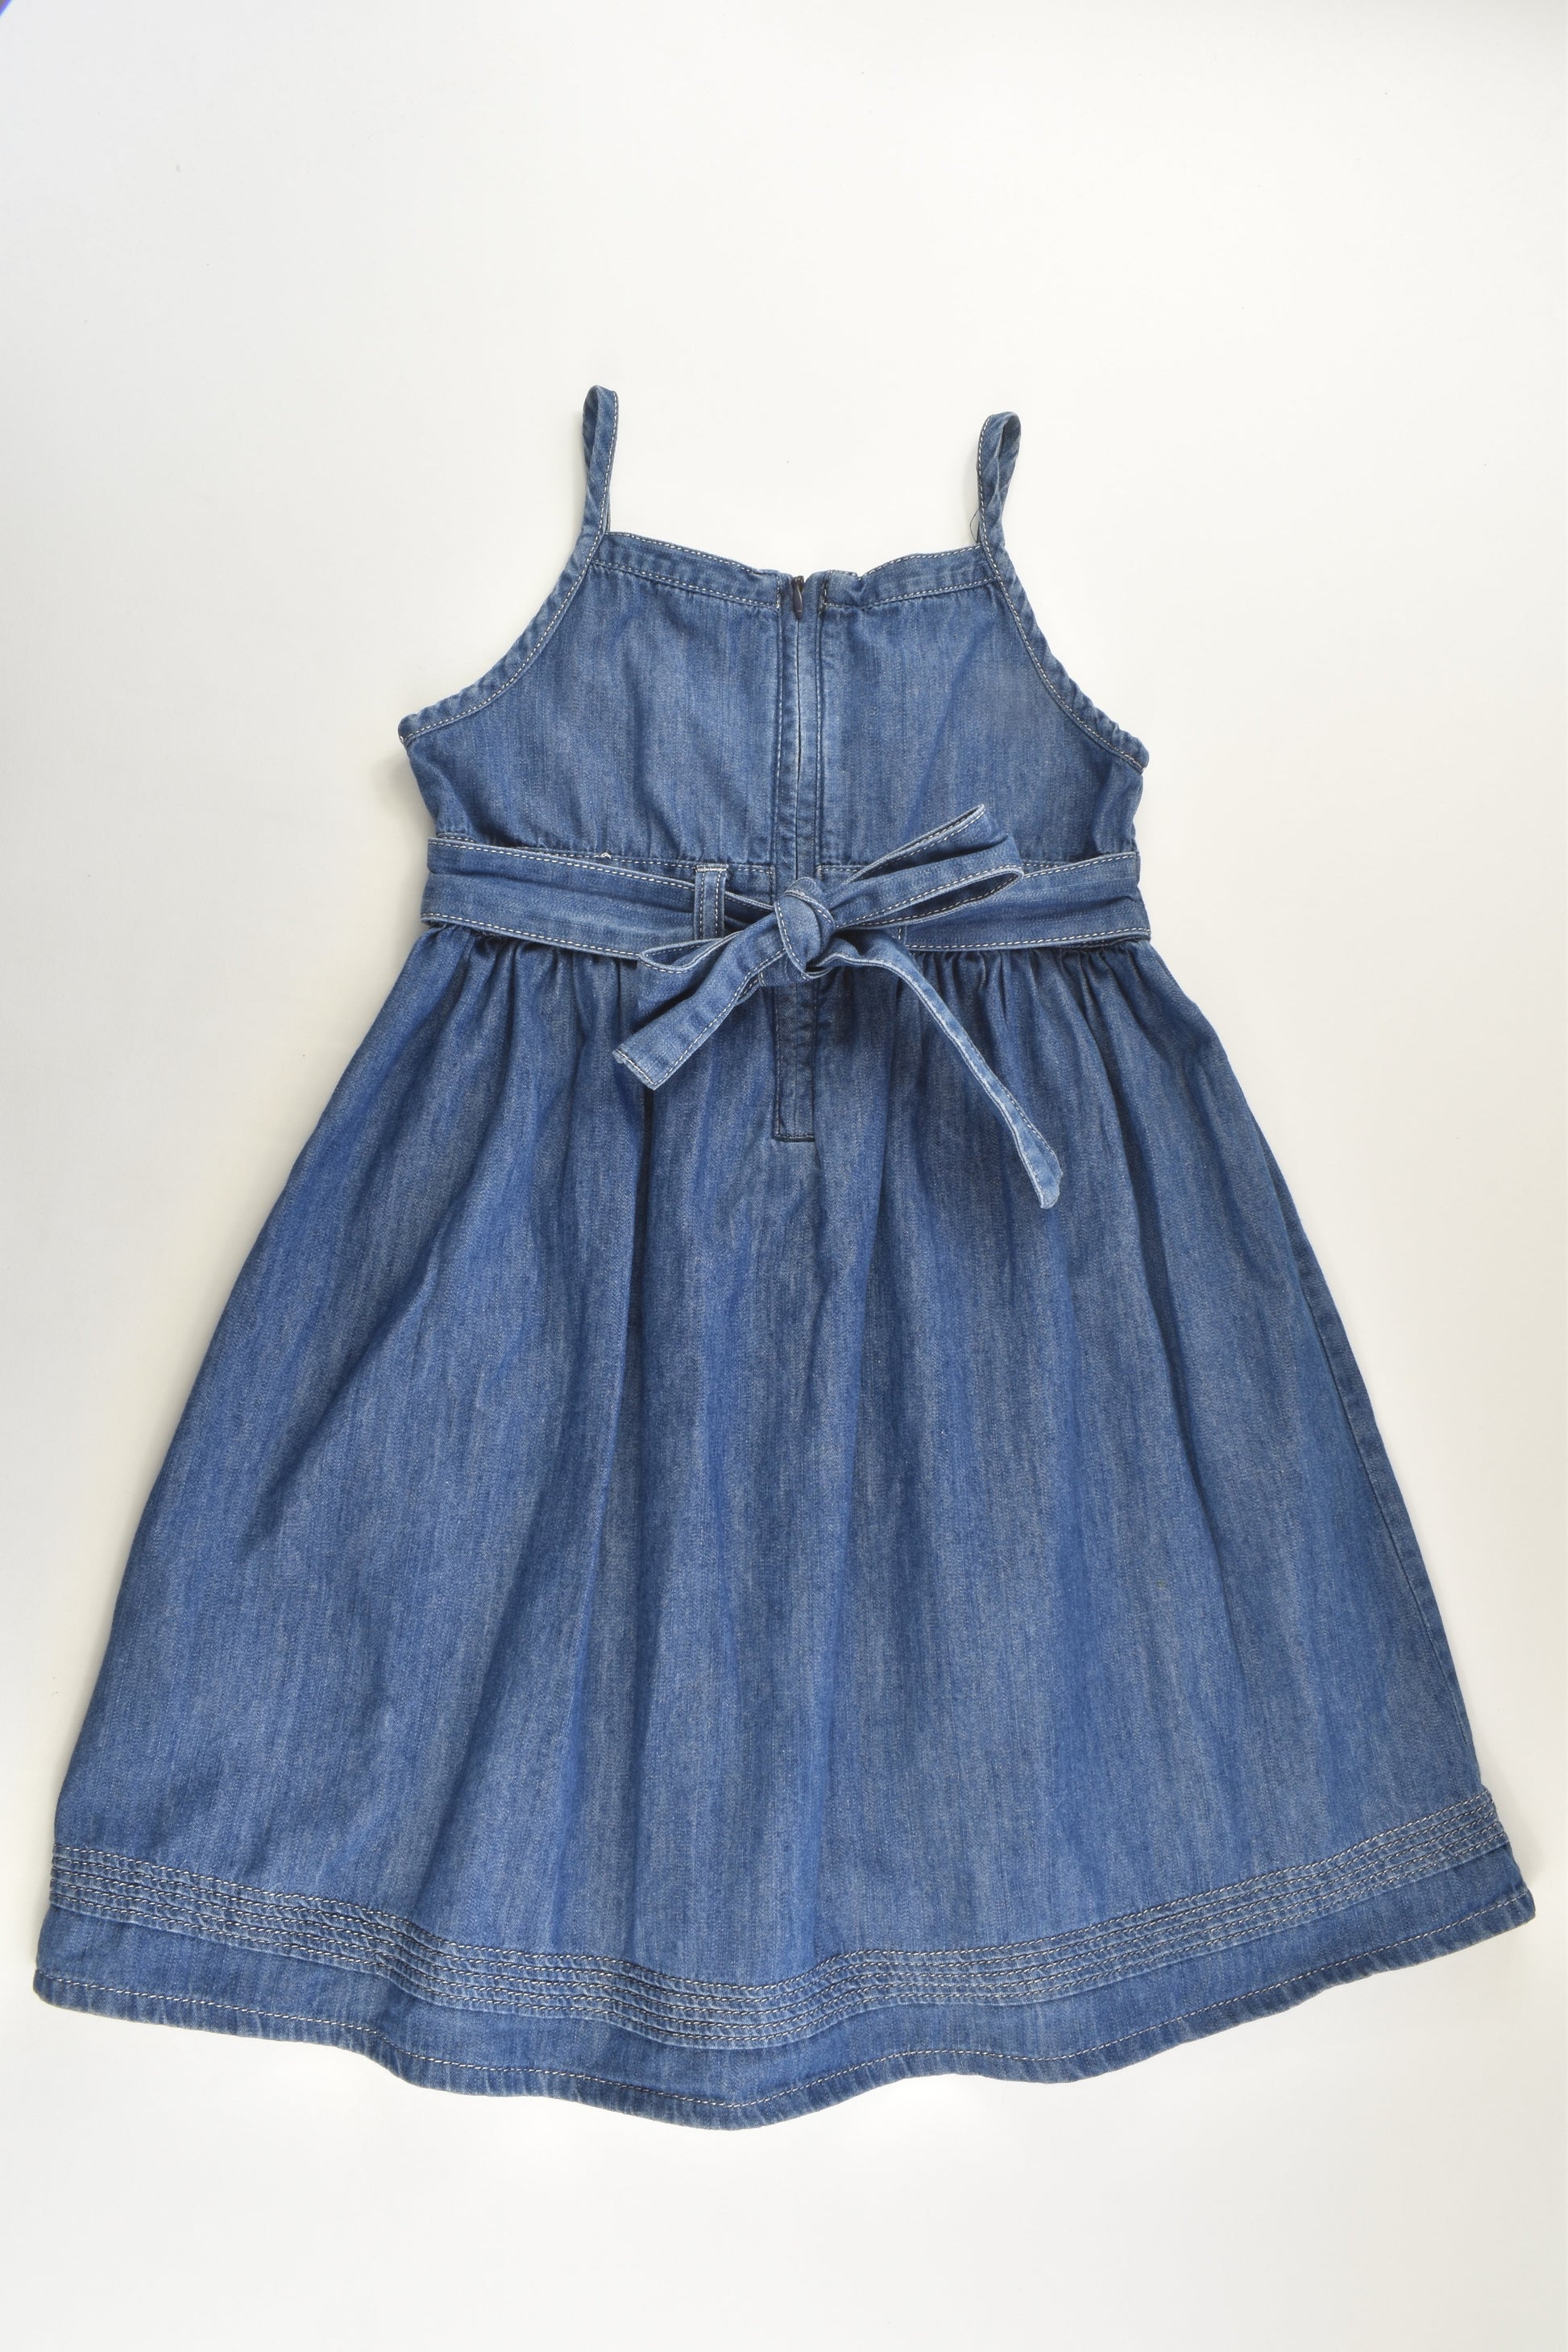 H&M Size 7-8 (128 cm) Denim Dress